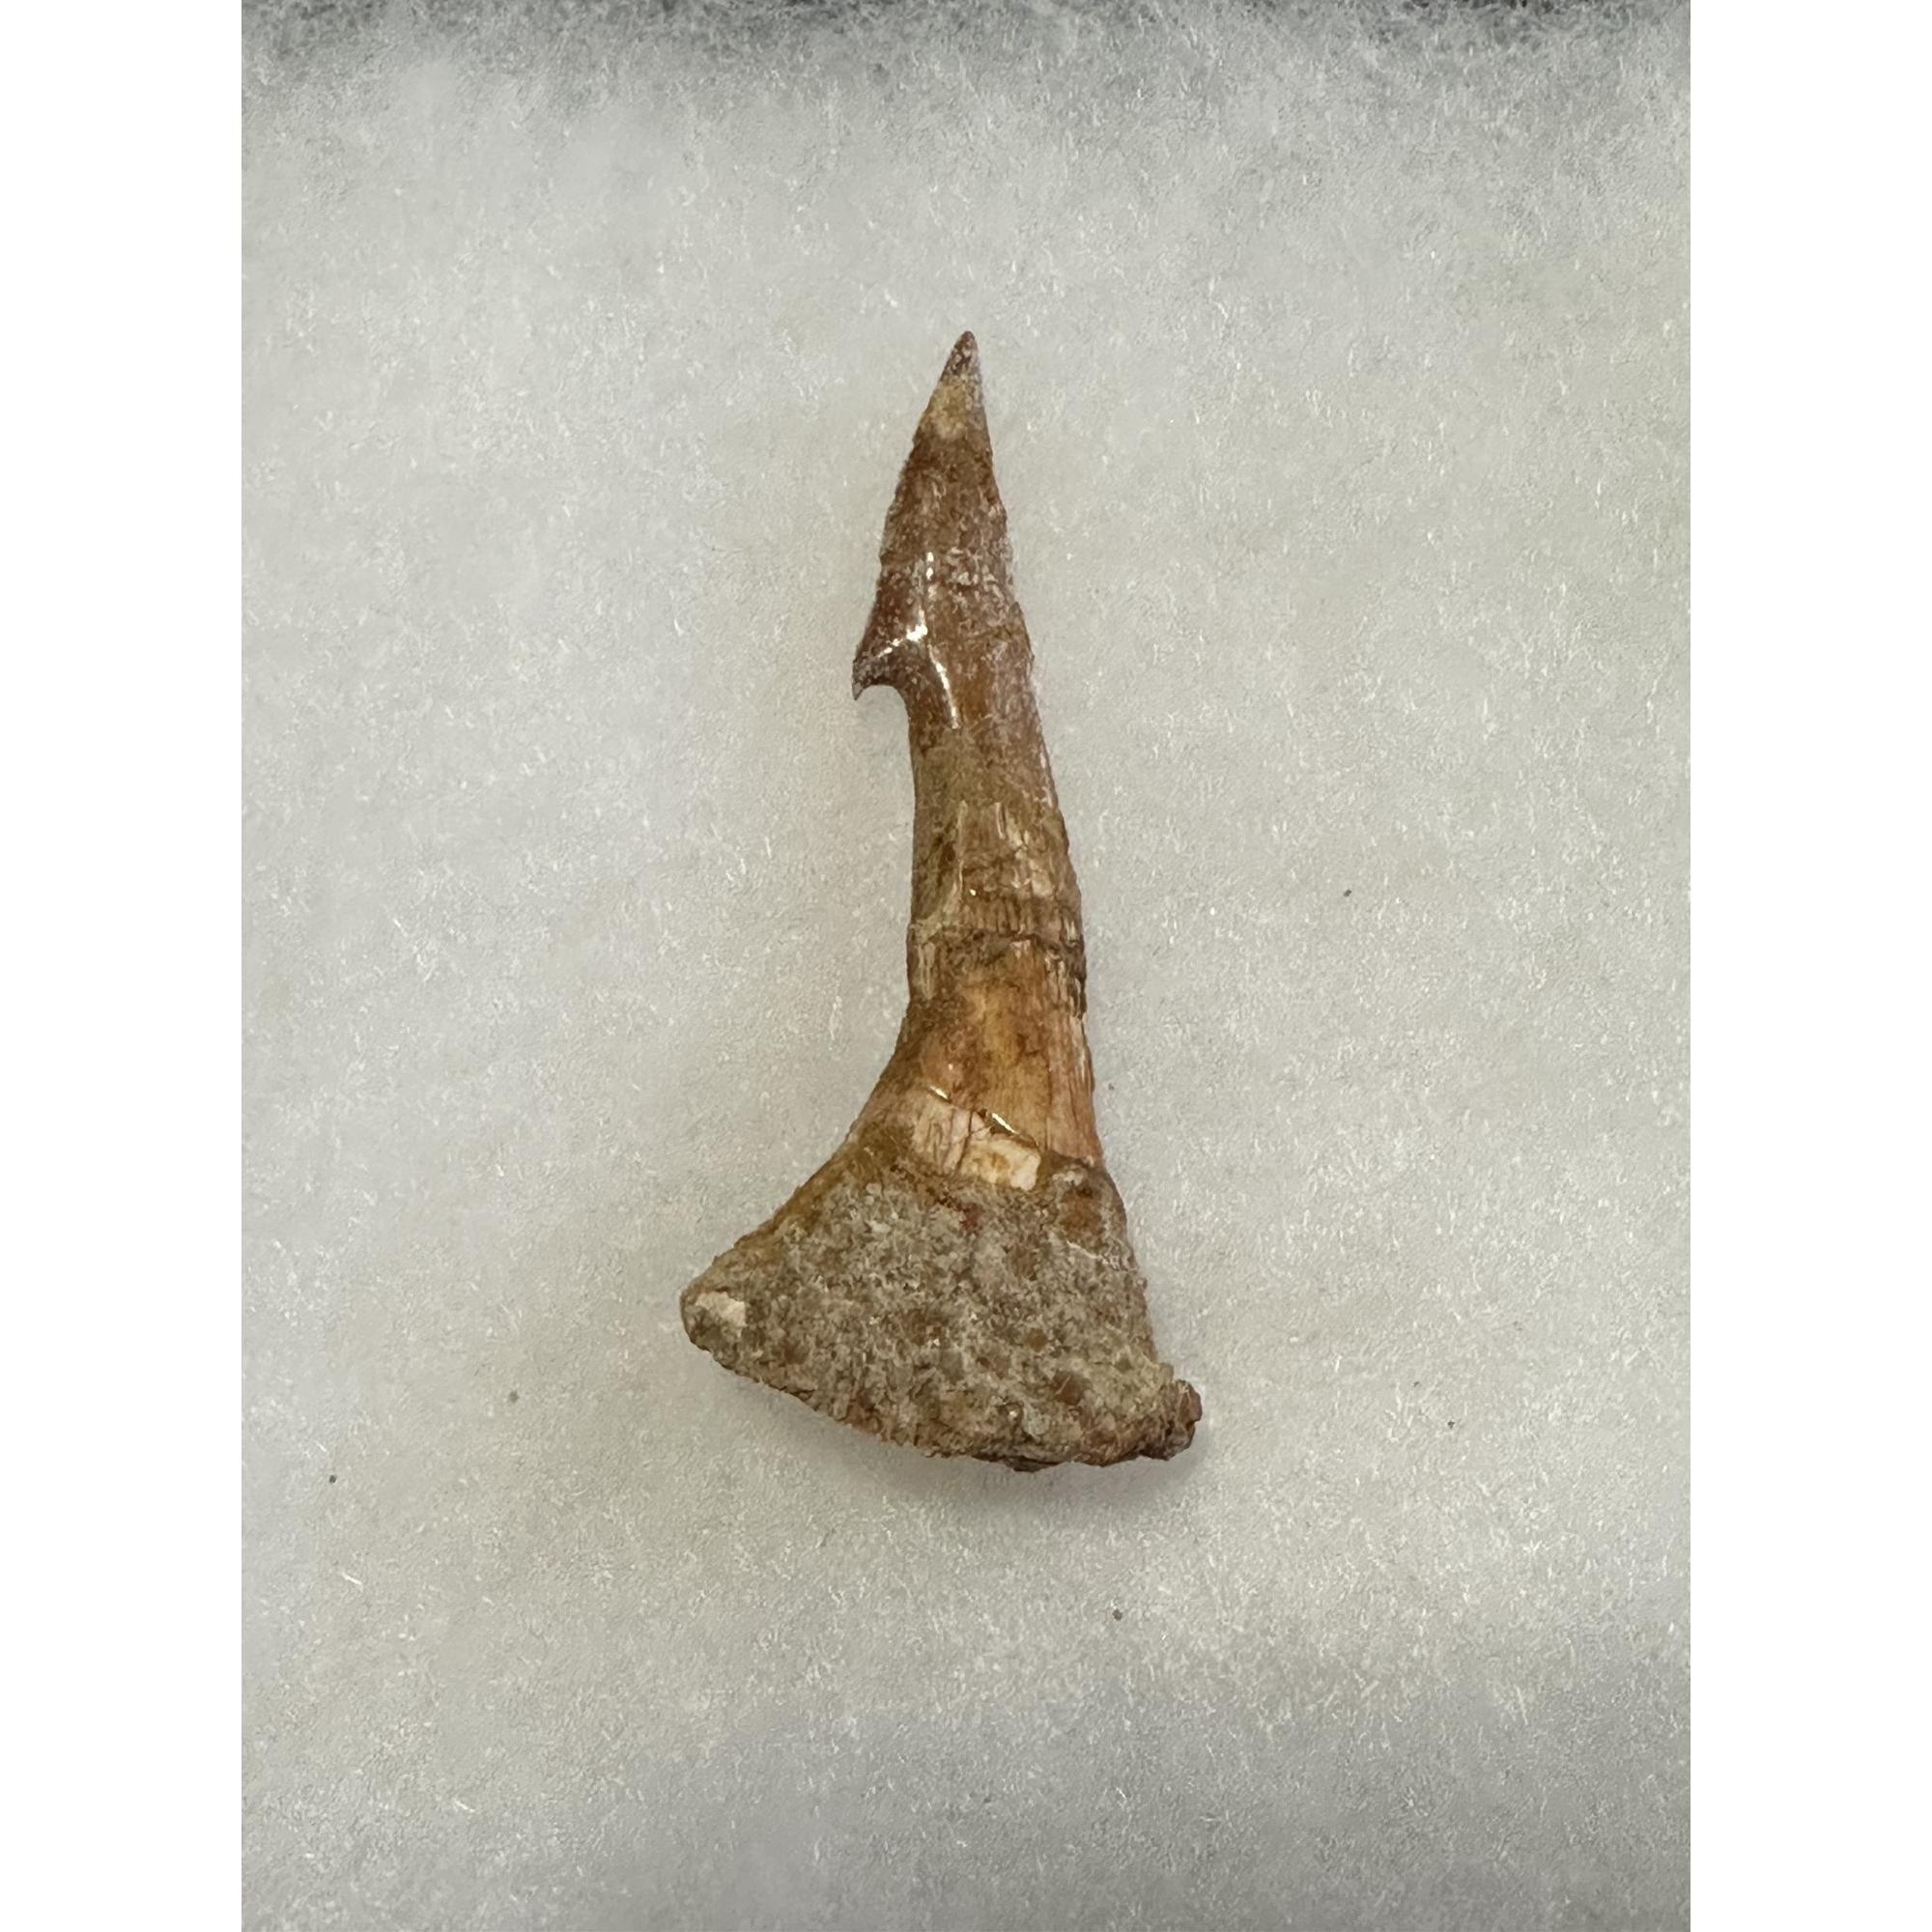 Sawfish Barb, Onchopristis, Sandstone covered Prehistoric Online